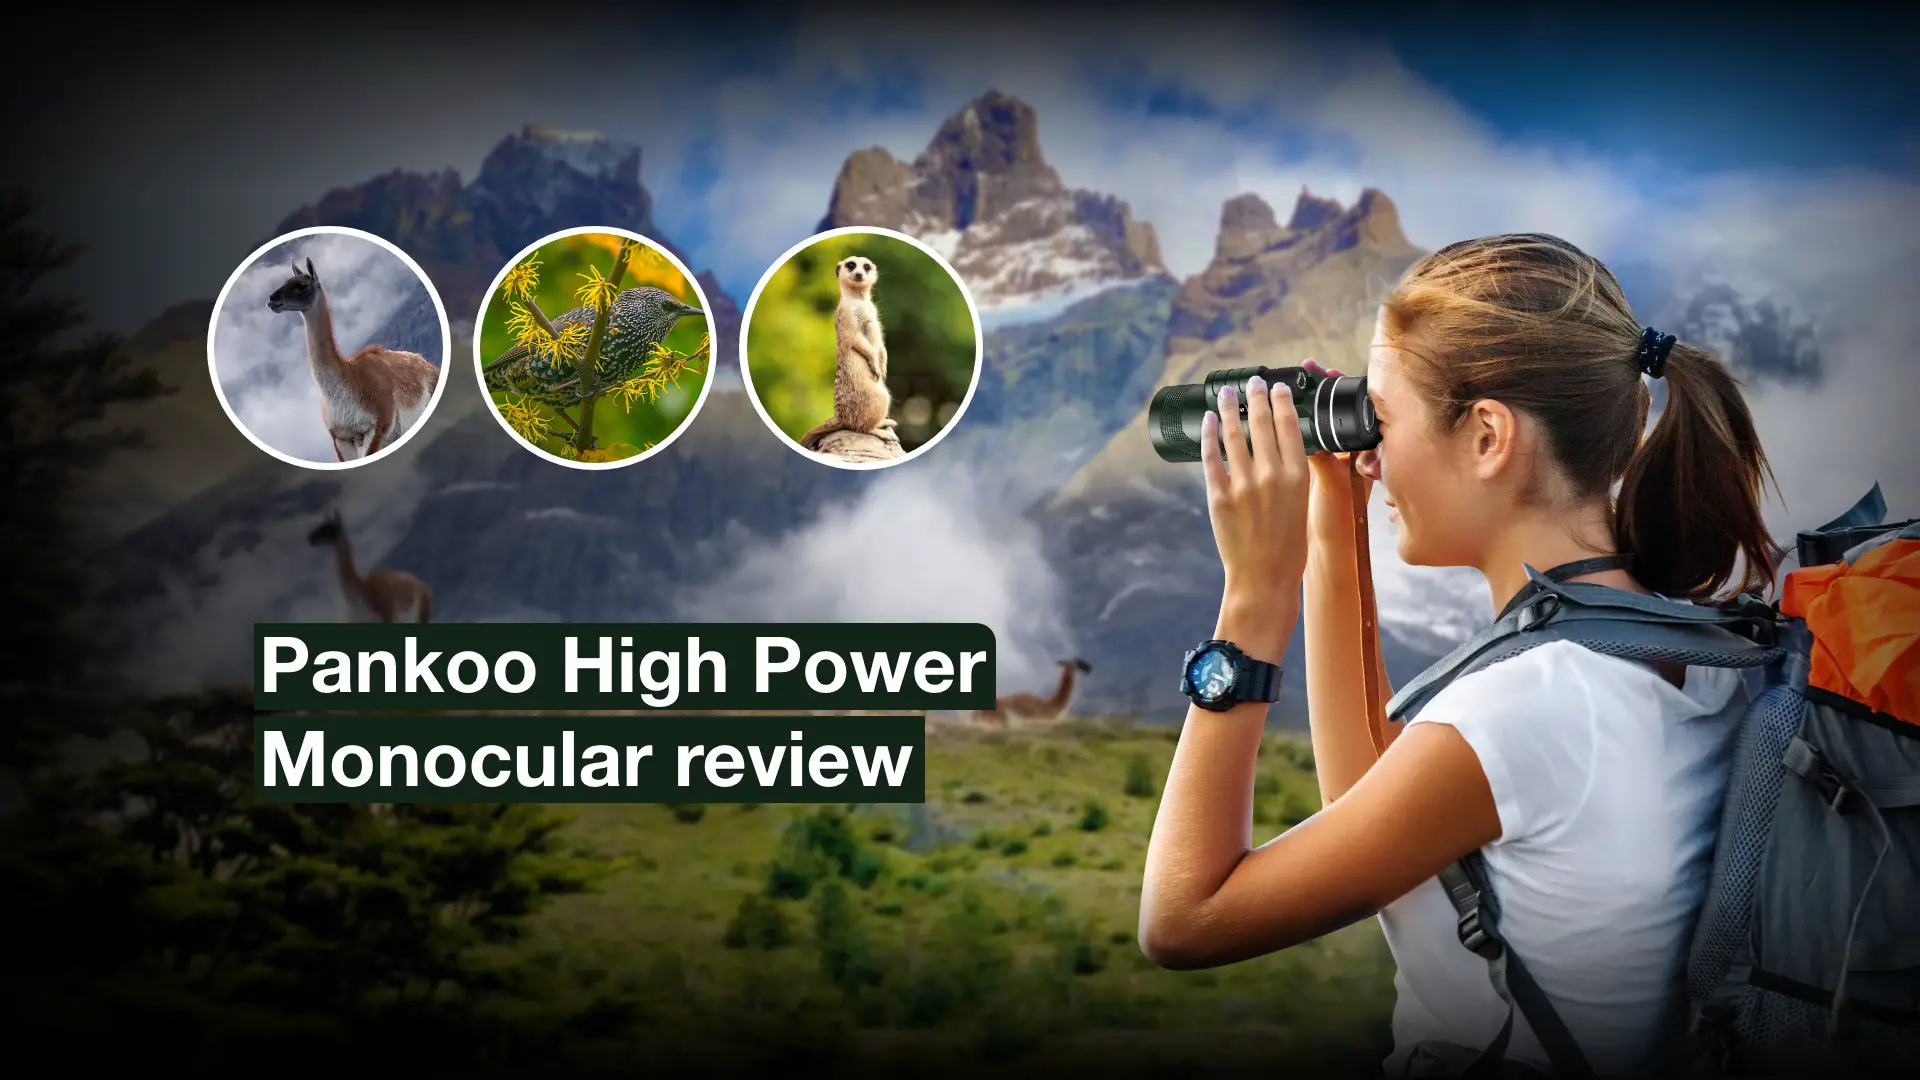 Pankoo High Power Monocular review